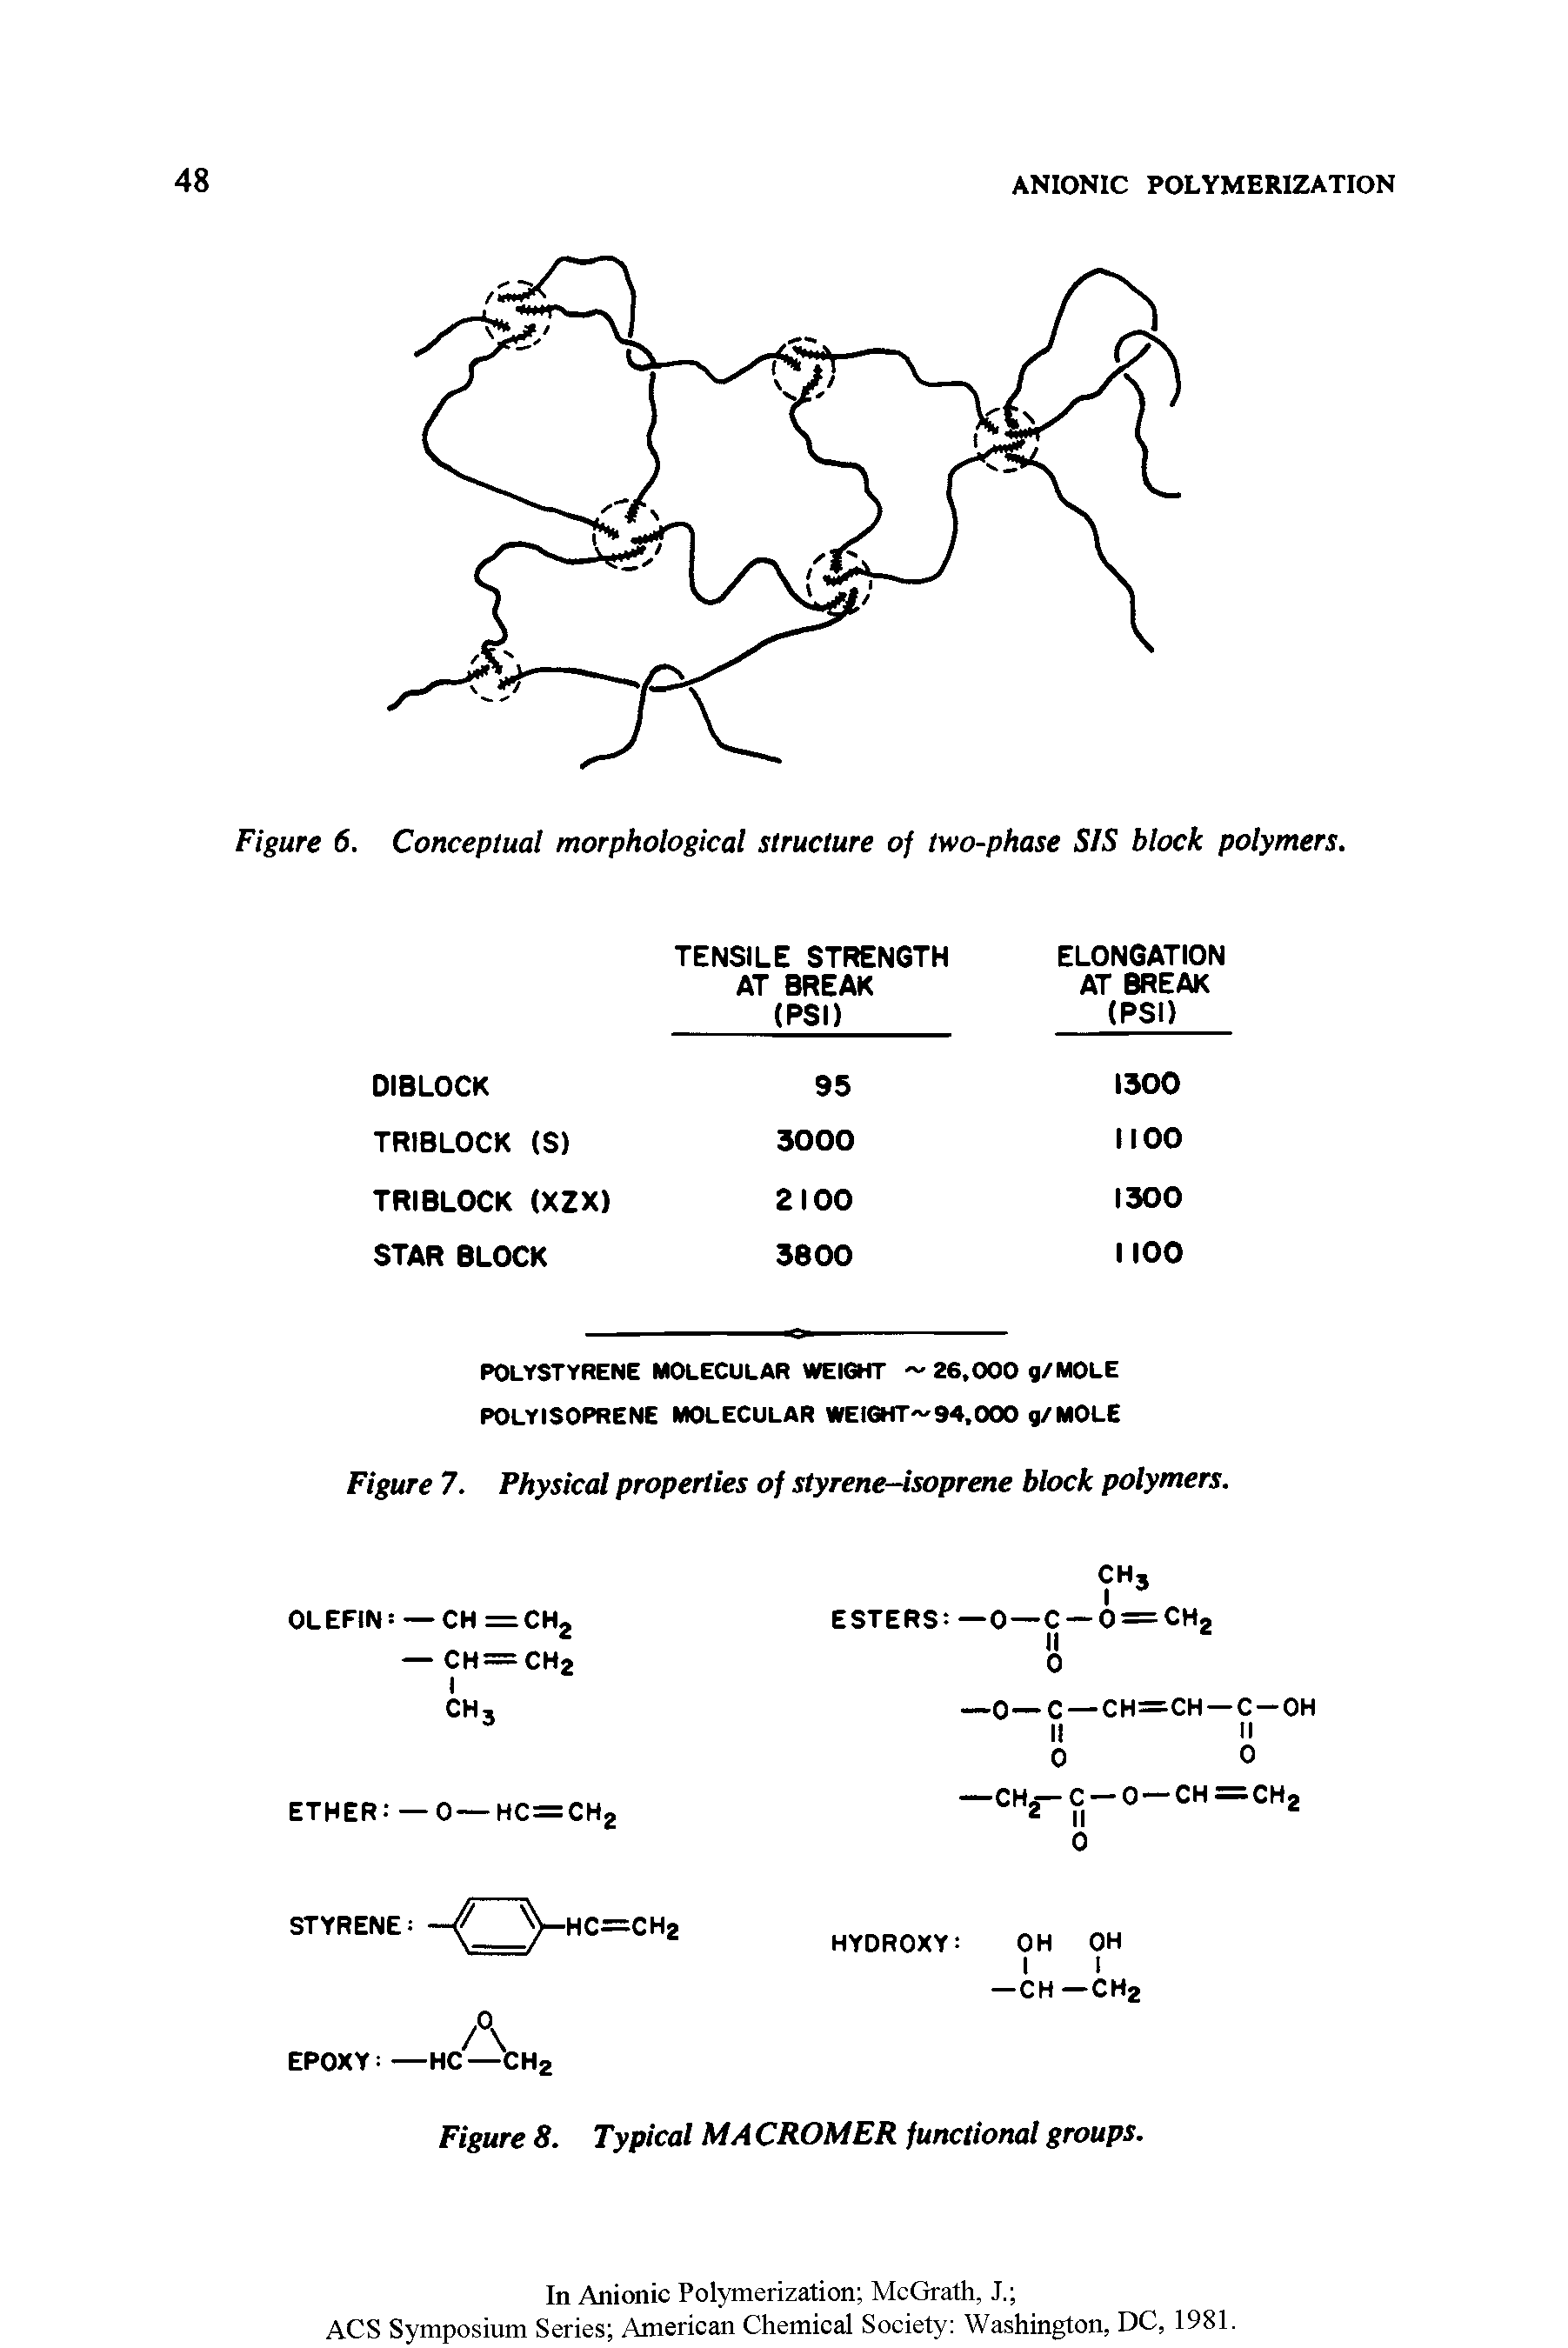 Figure 7. Physical properties of styrene-isoprene block polymers.